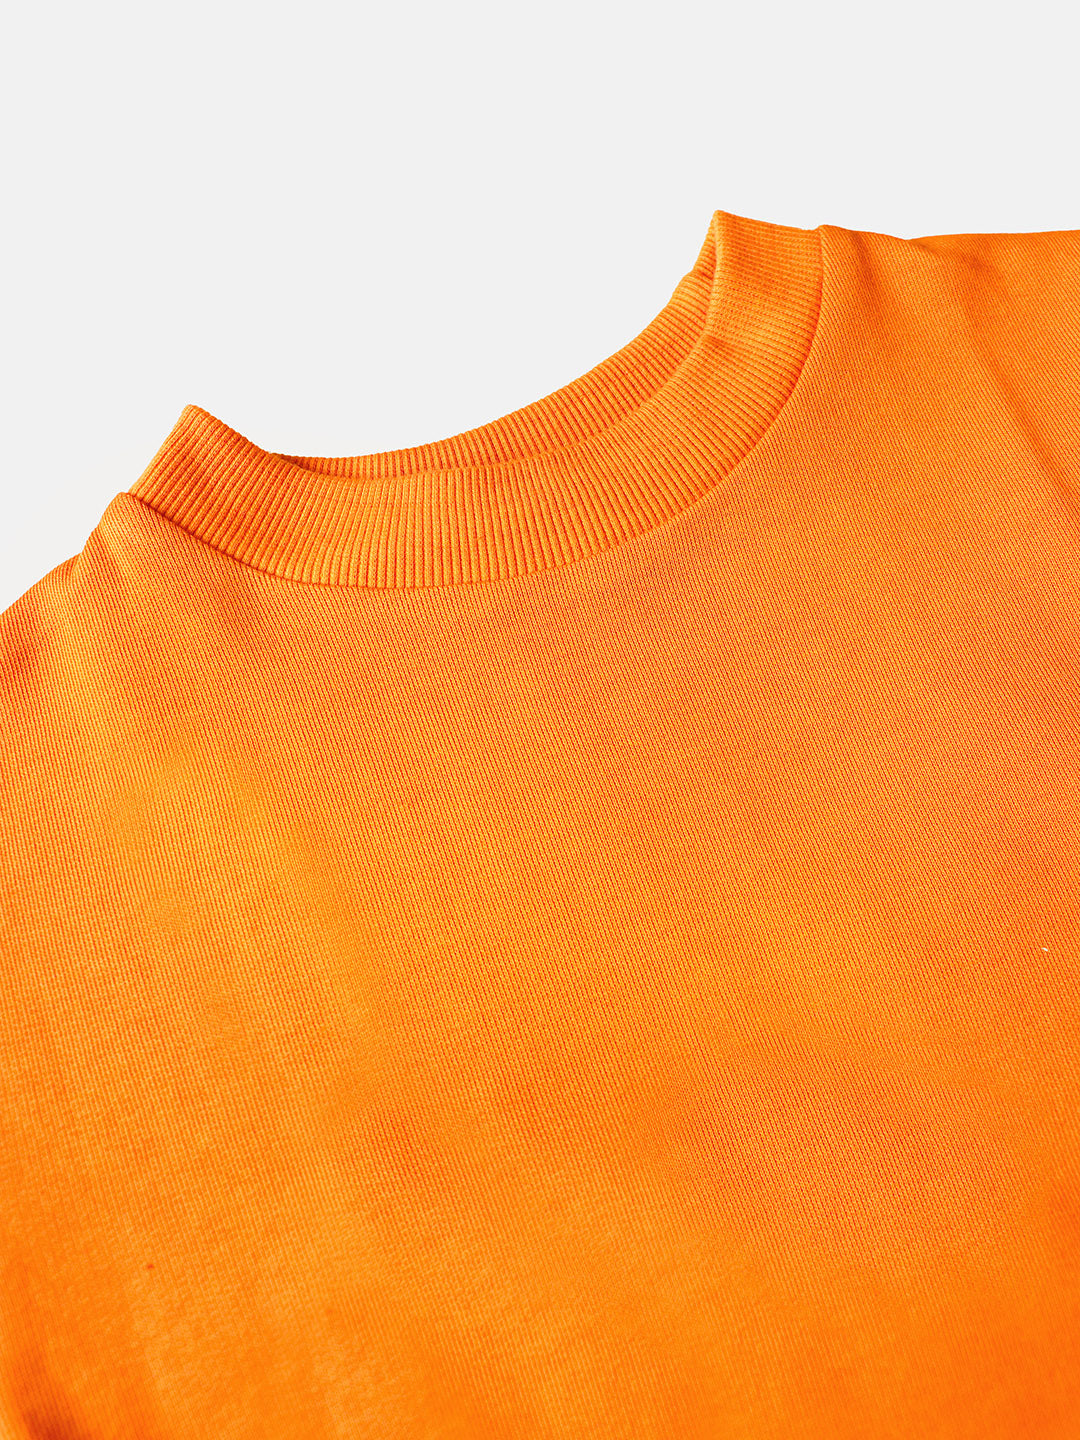 Orange Sweatshirt and Orange Joggers